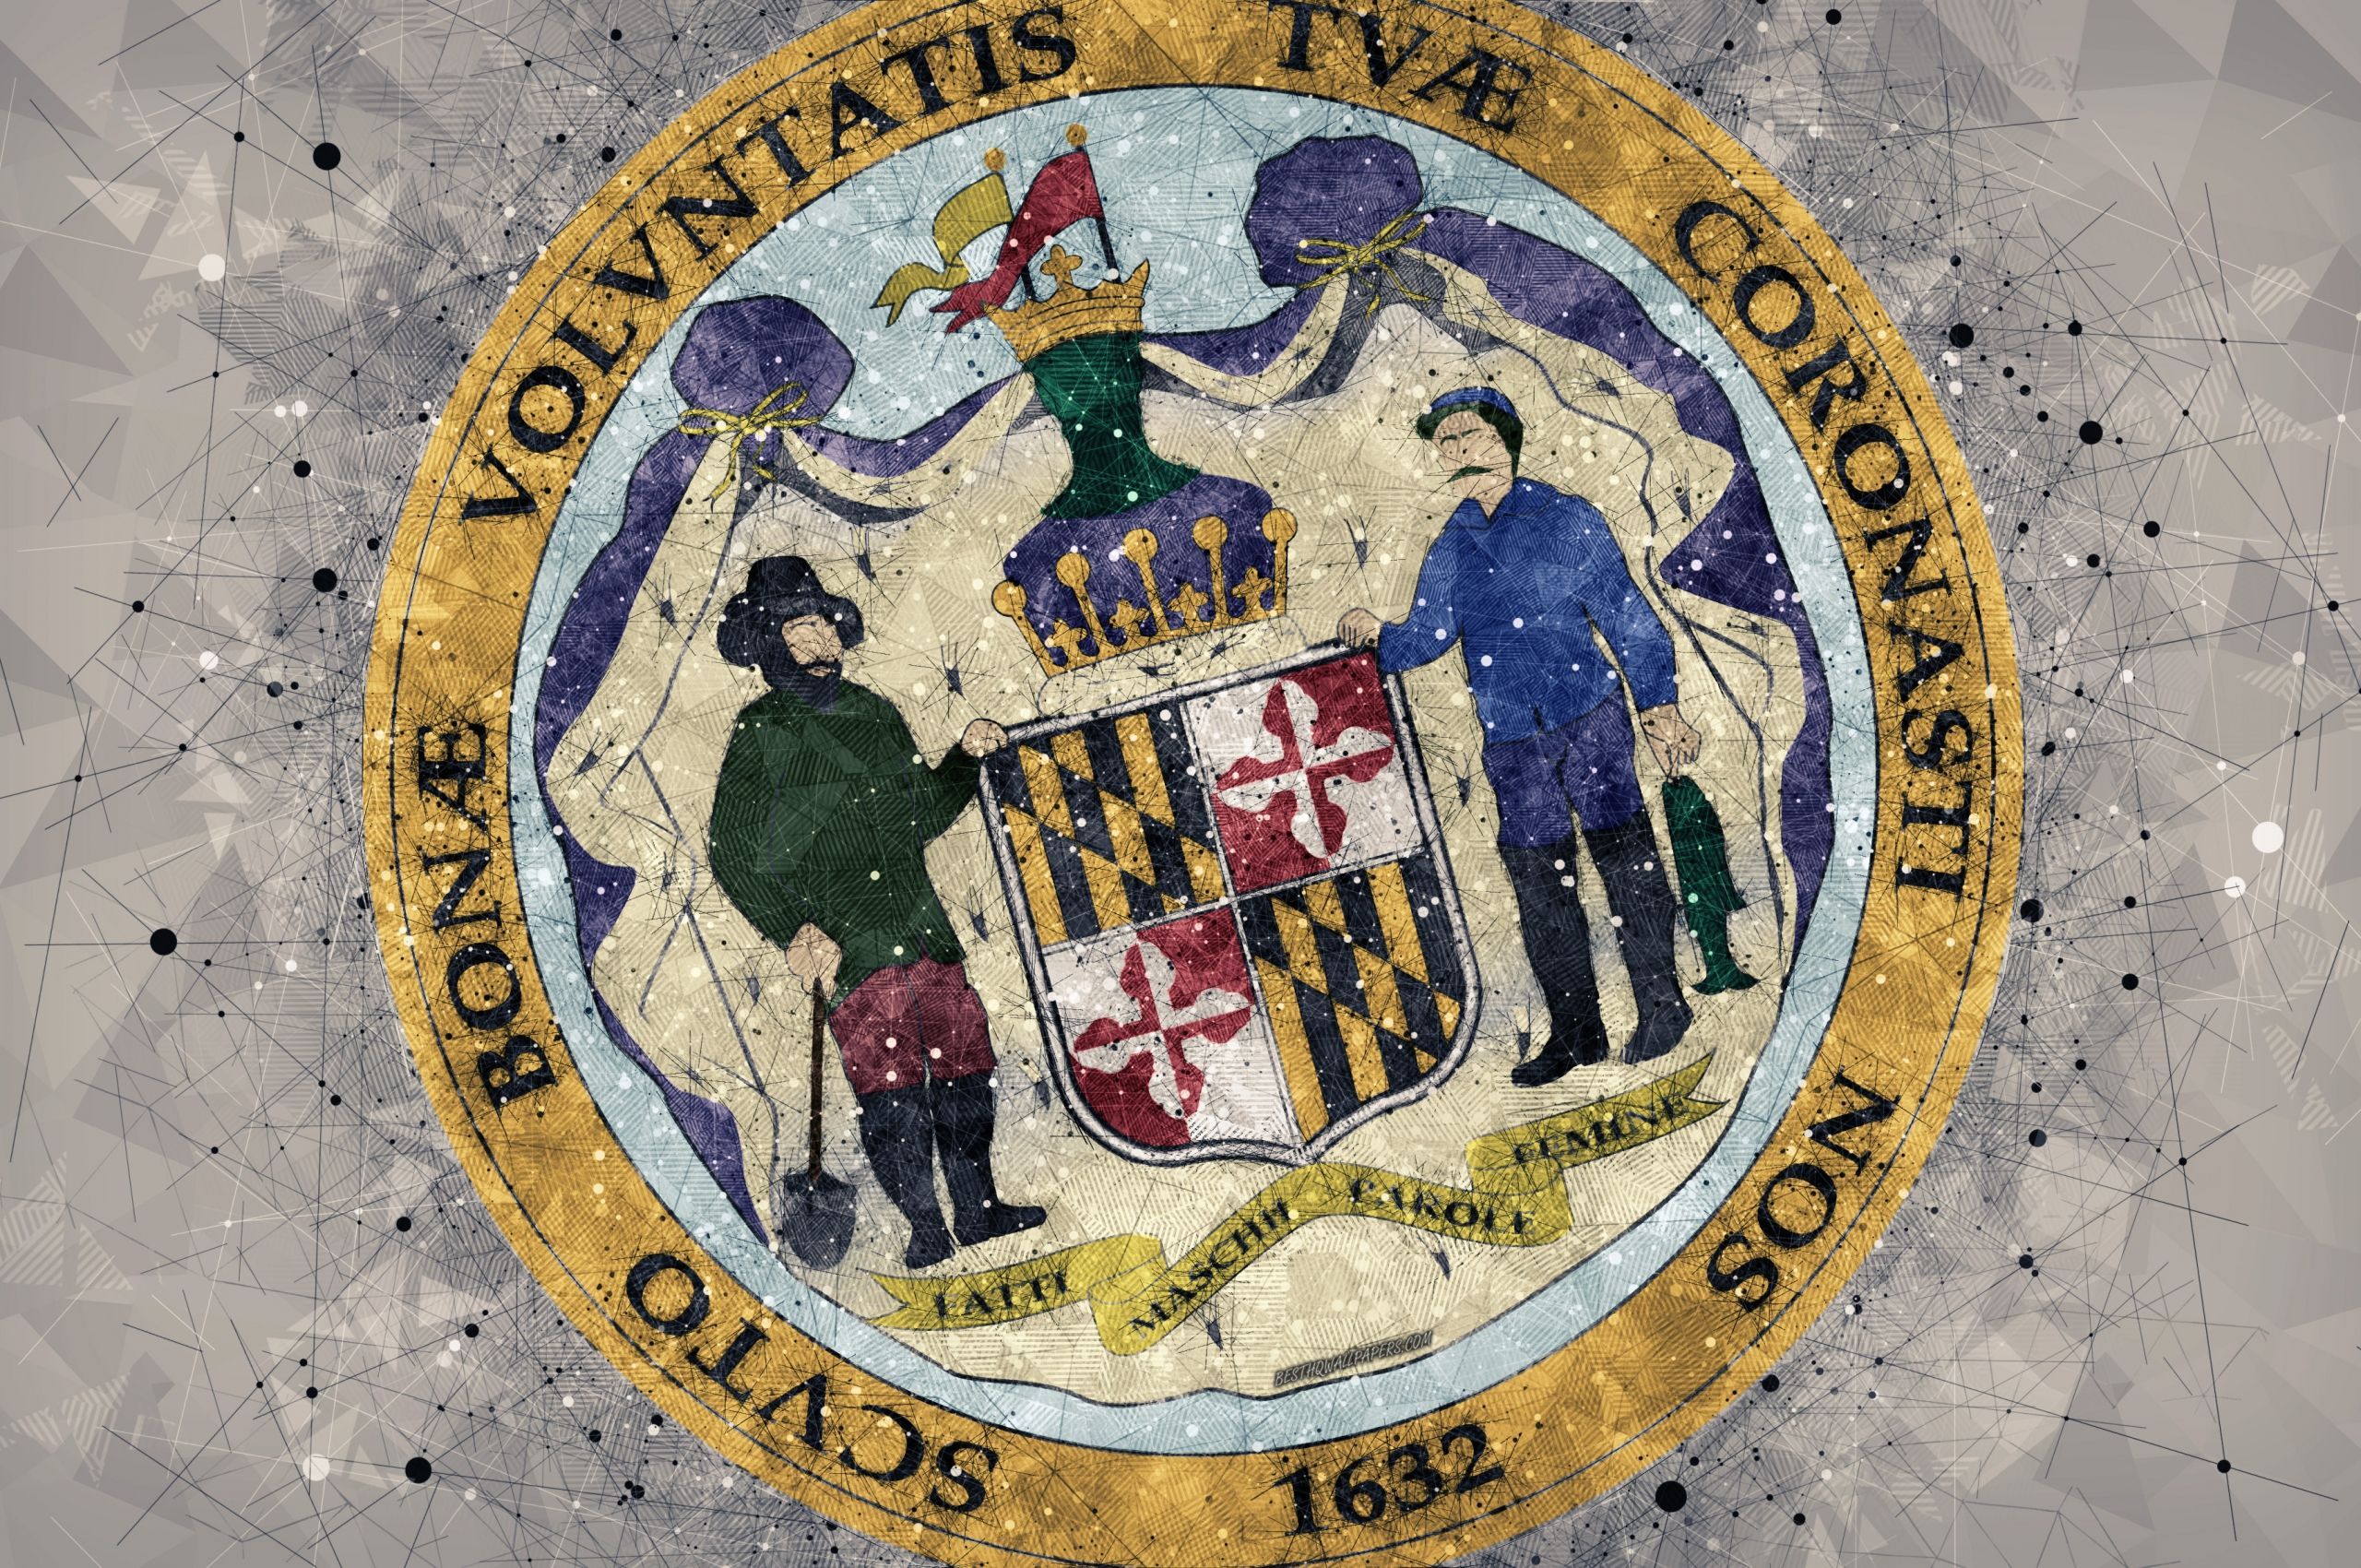 Free download Download wallpaper Seal of Maryland 4k emblem